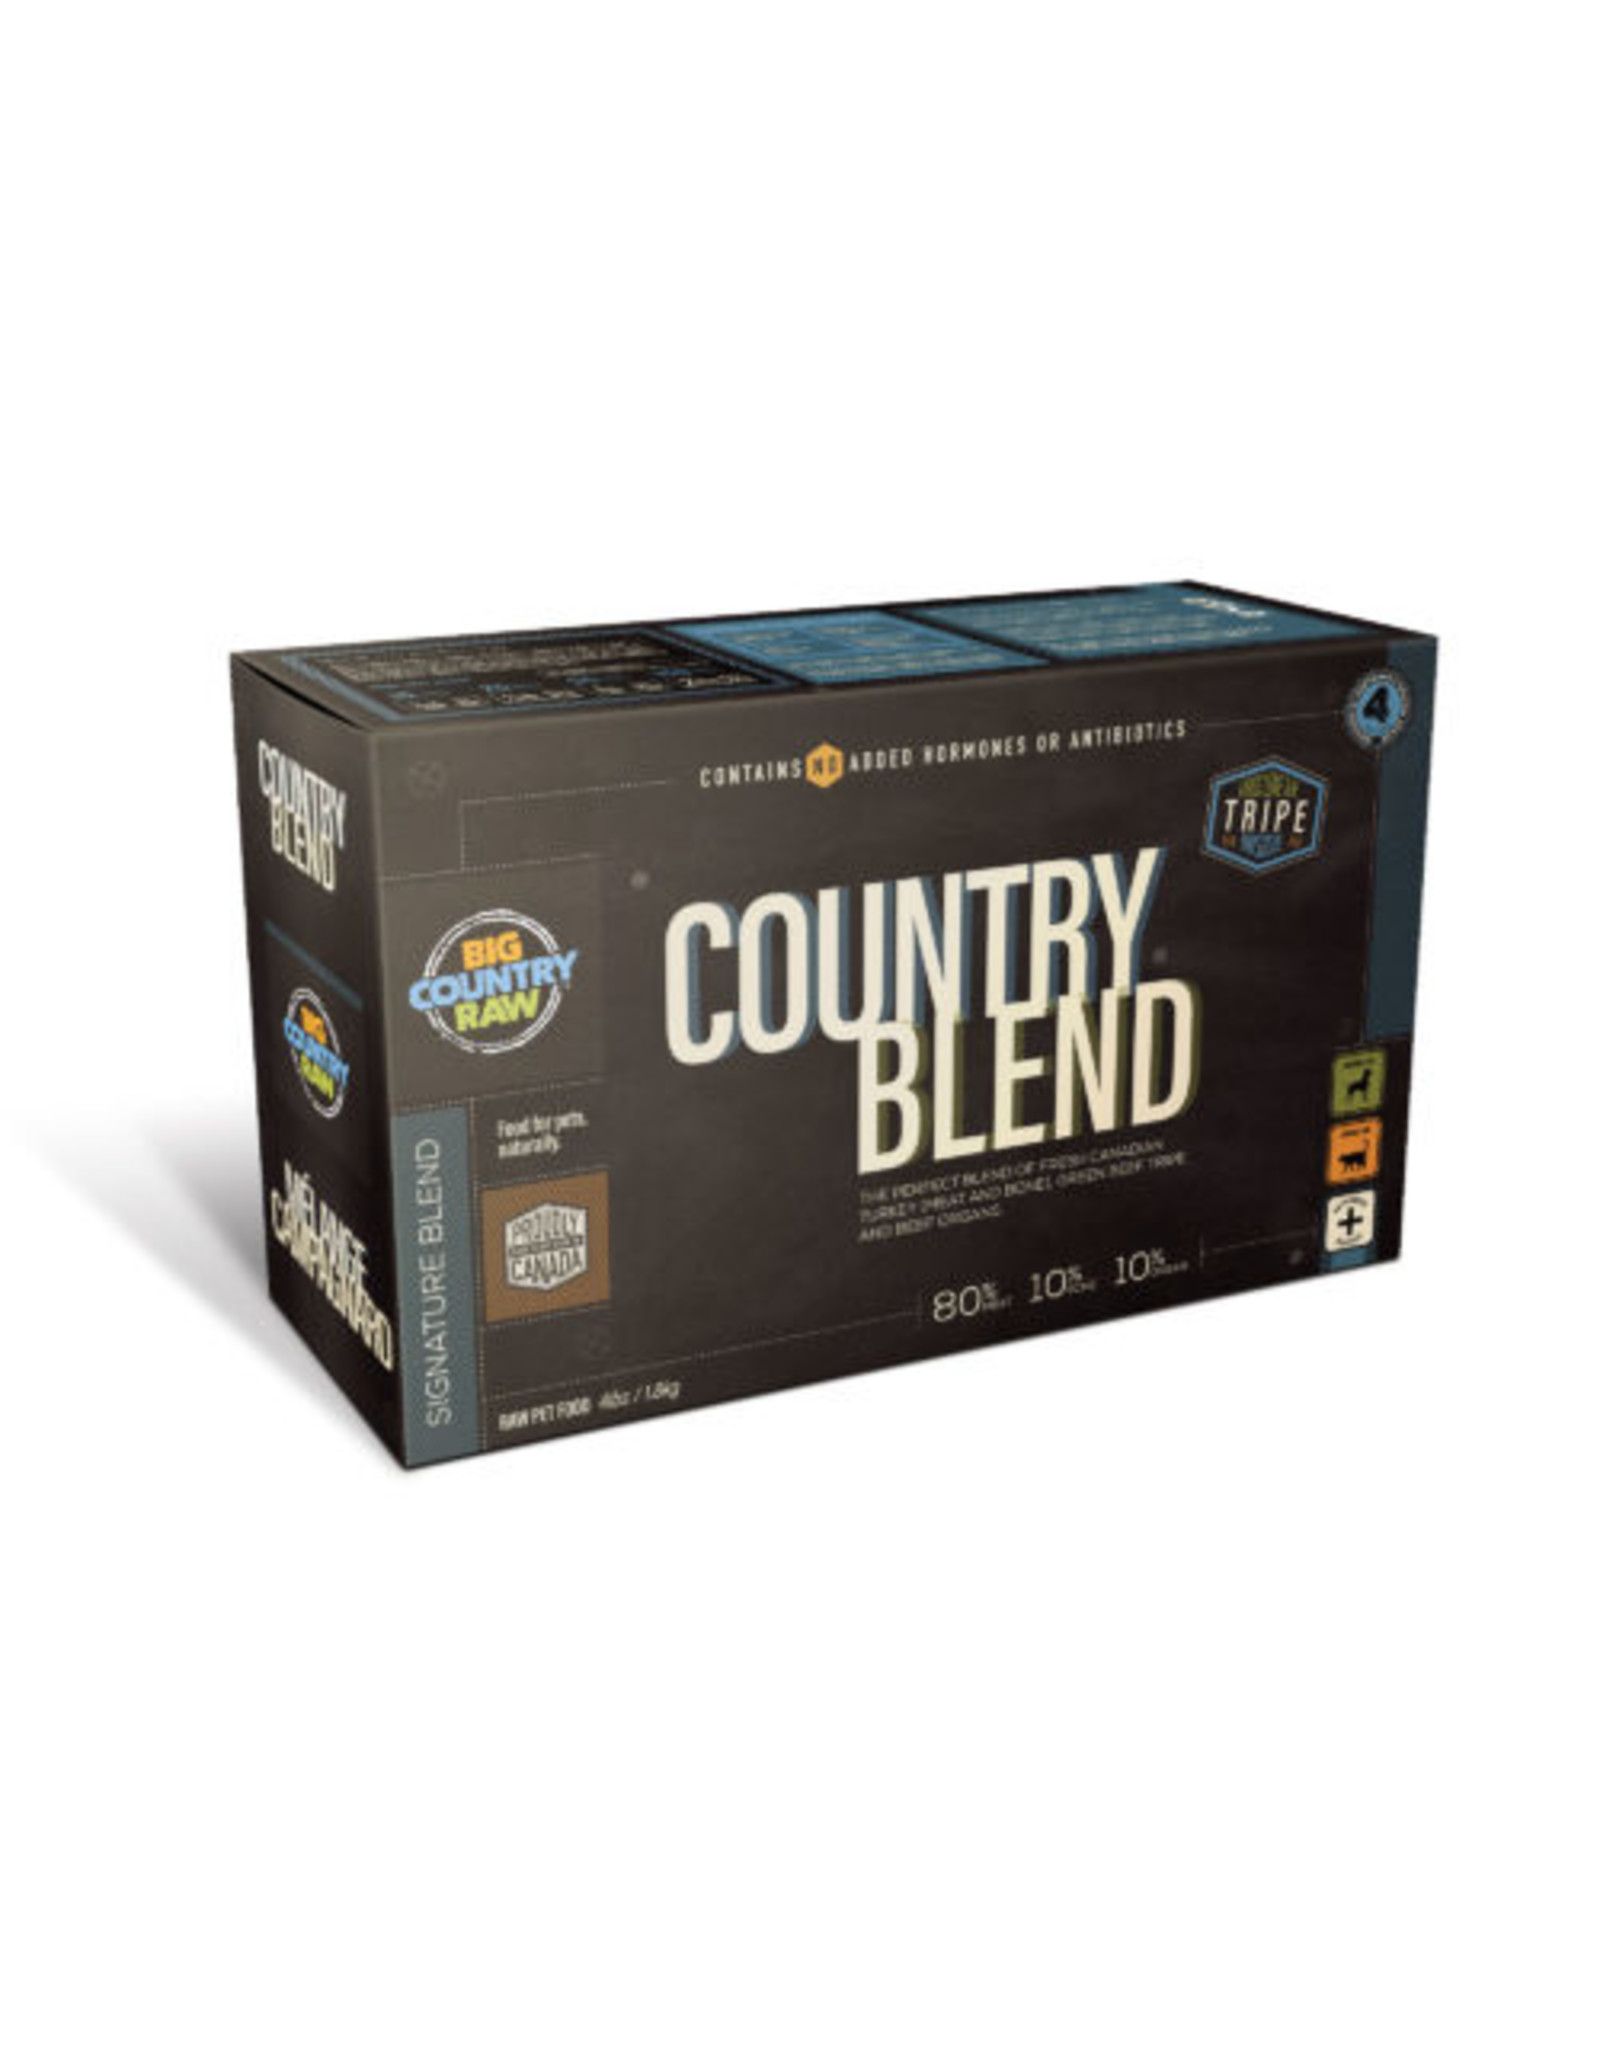 Big Country Raw Country Blend Carton 4 x 1lb